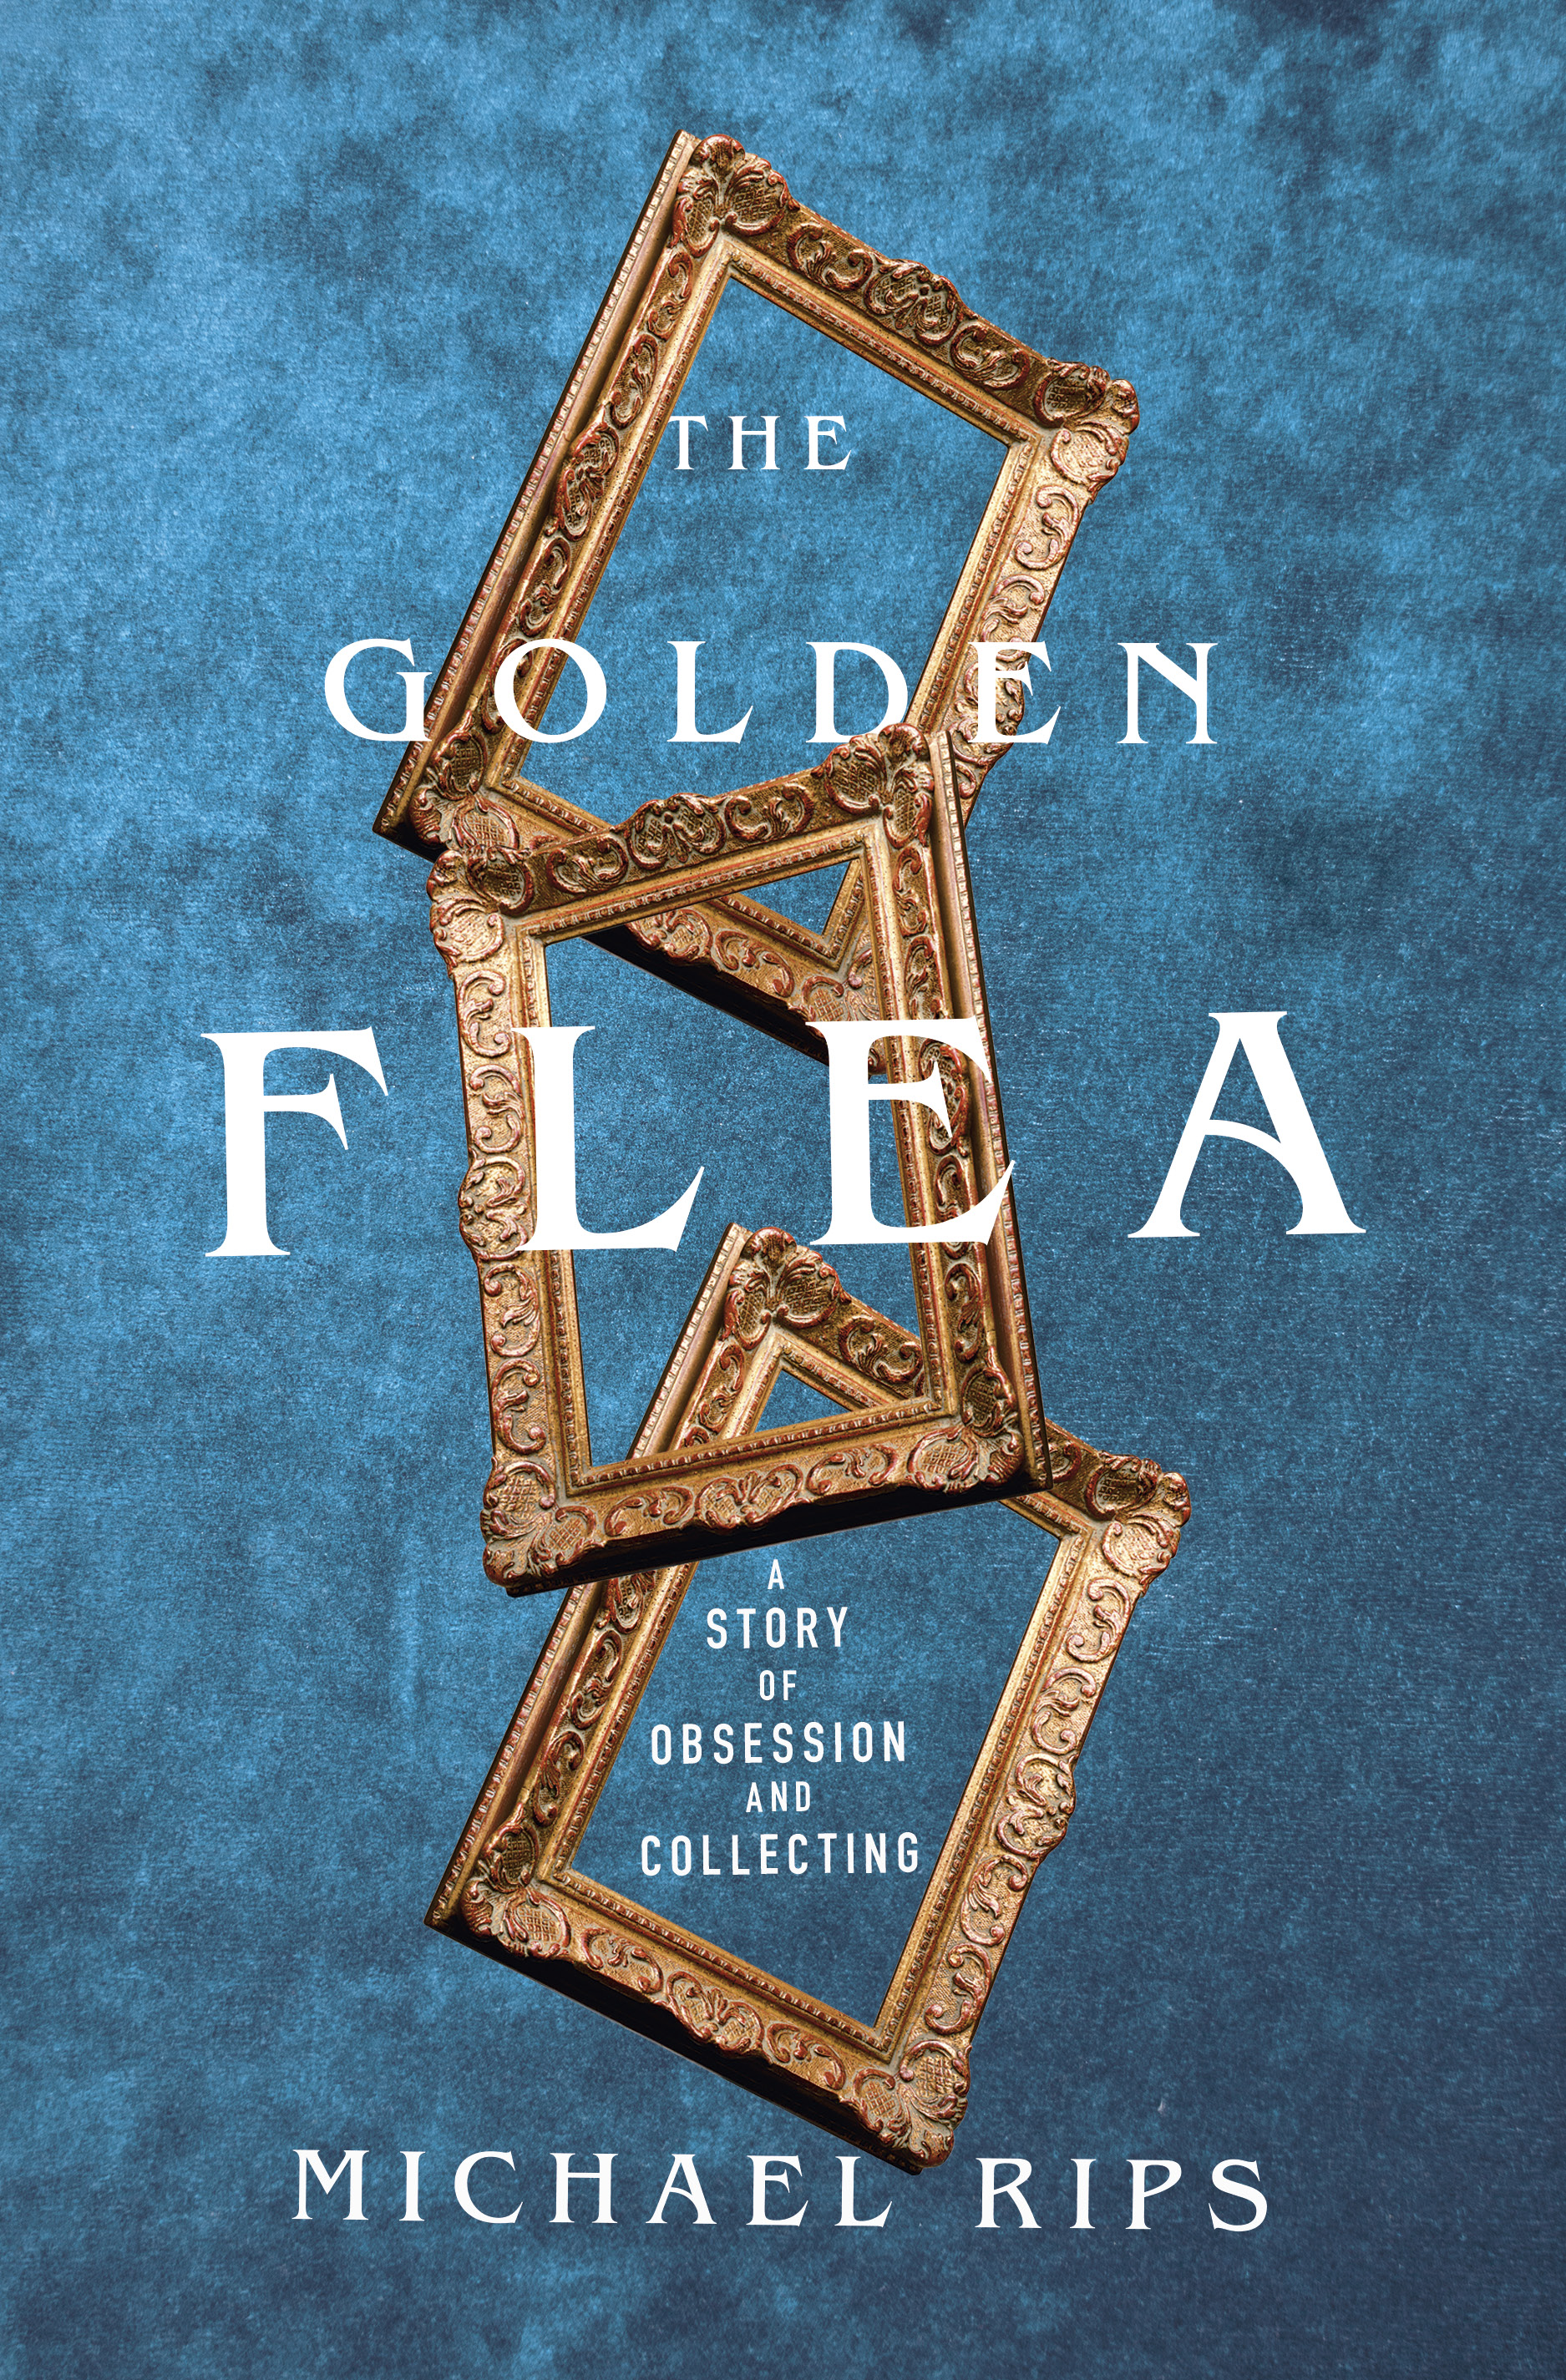 Book Launch: The Golden Flea by Michael Rips (POSTPONED)